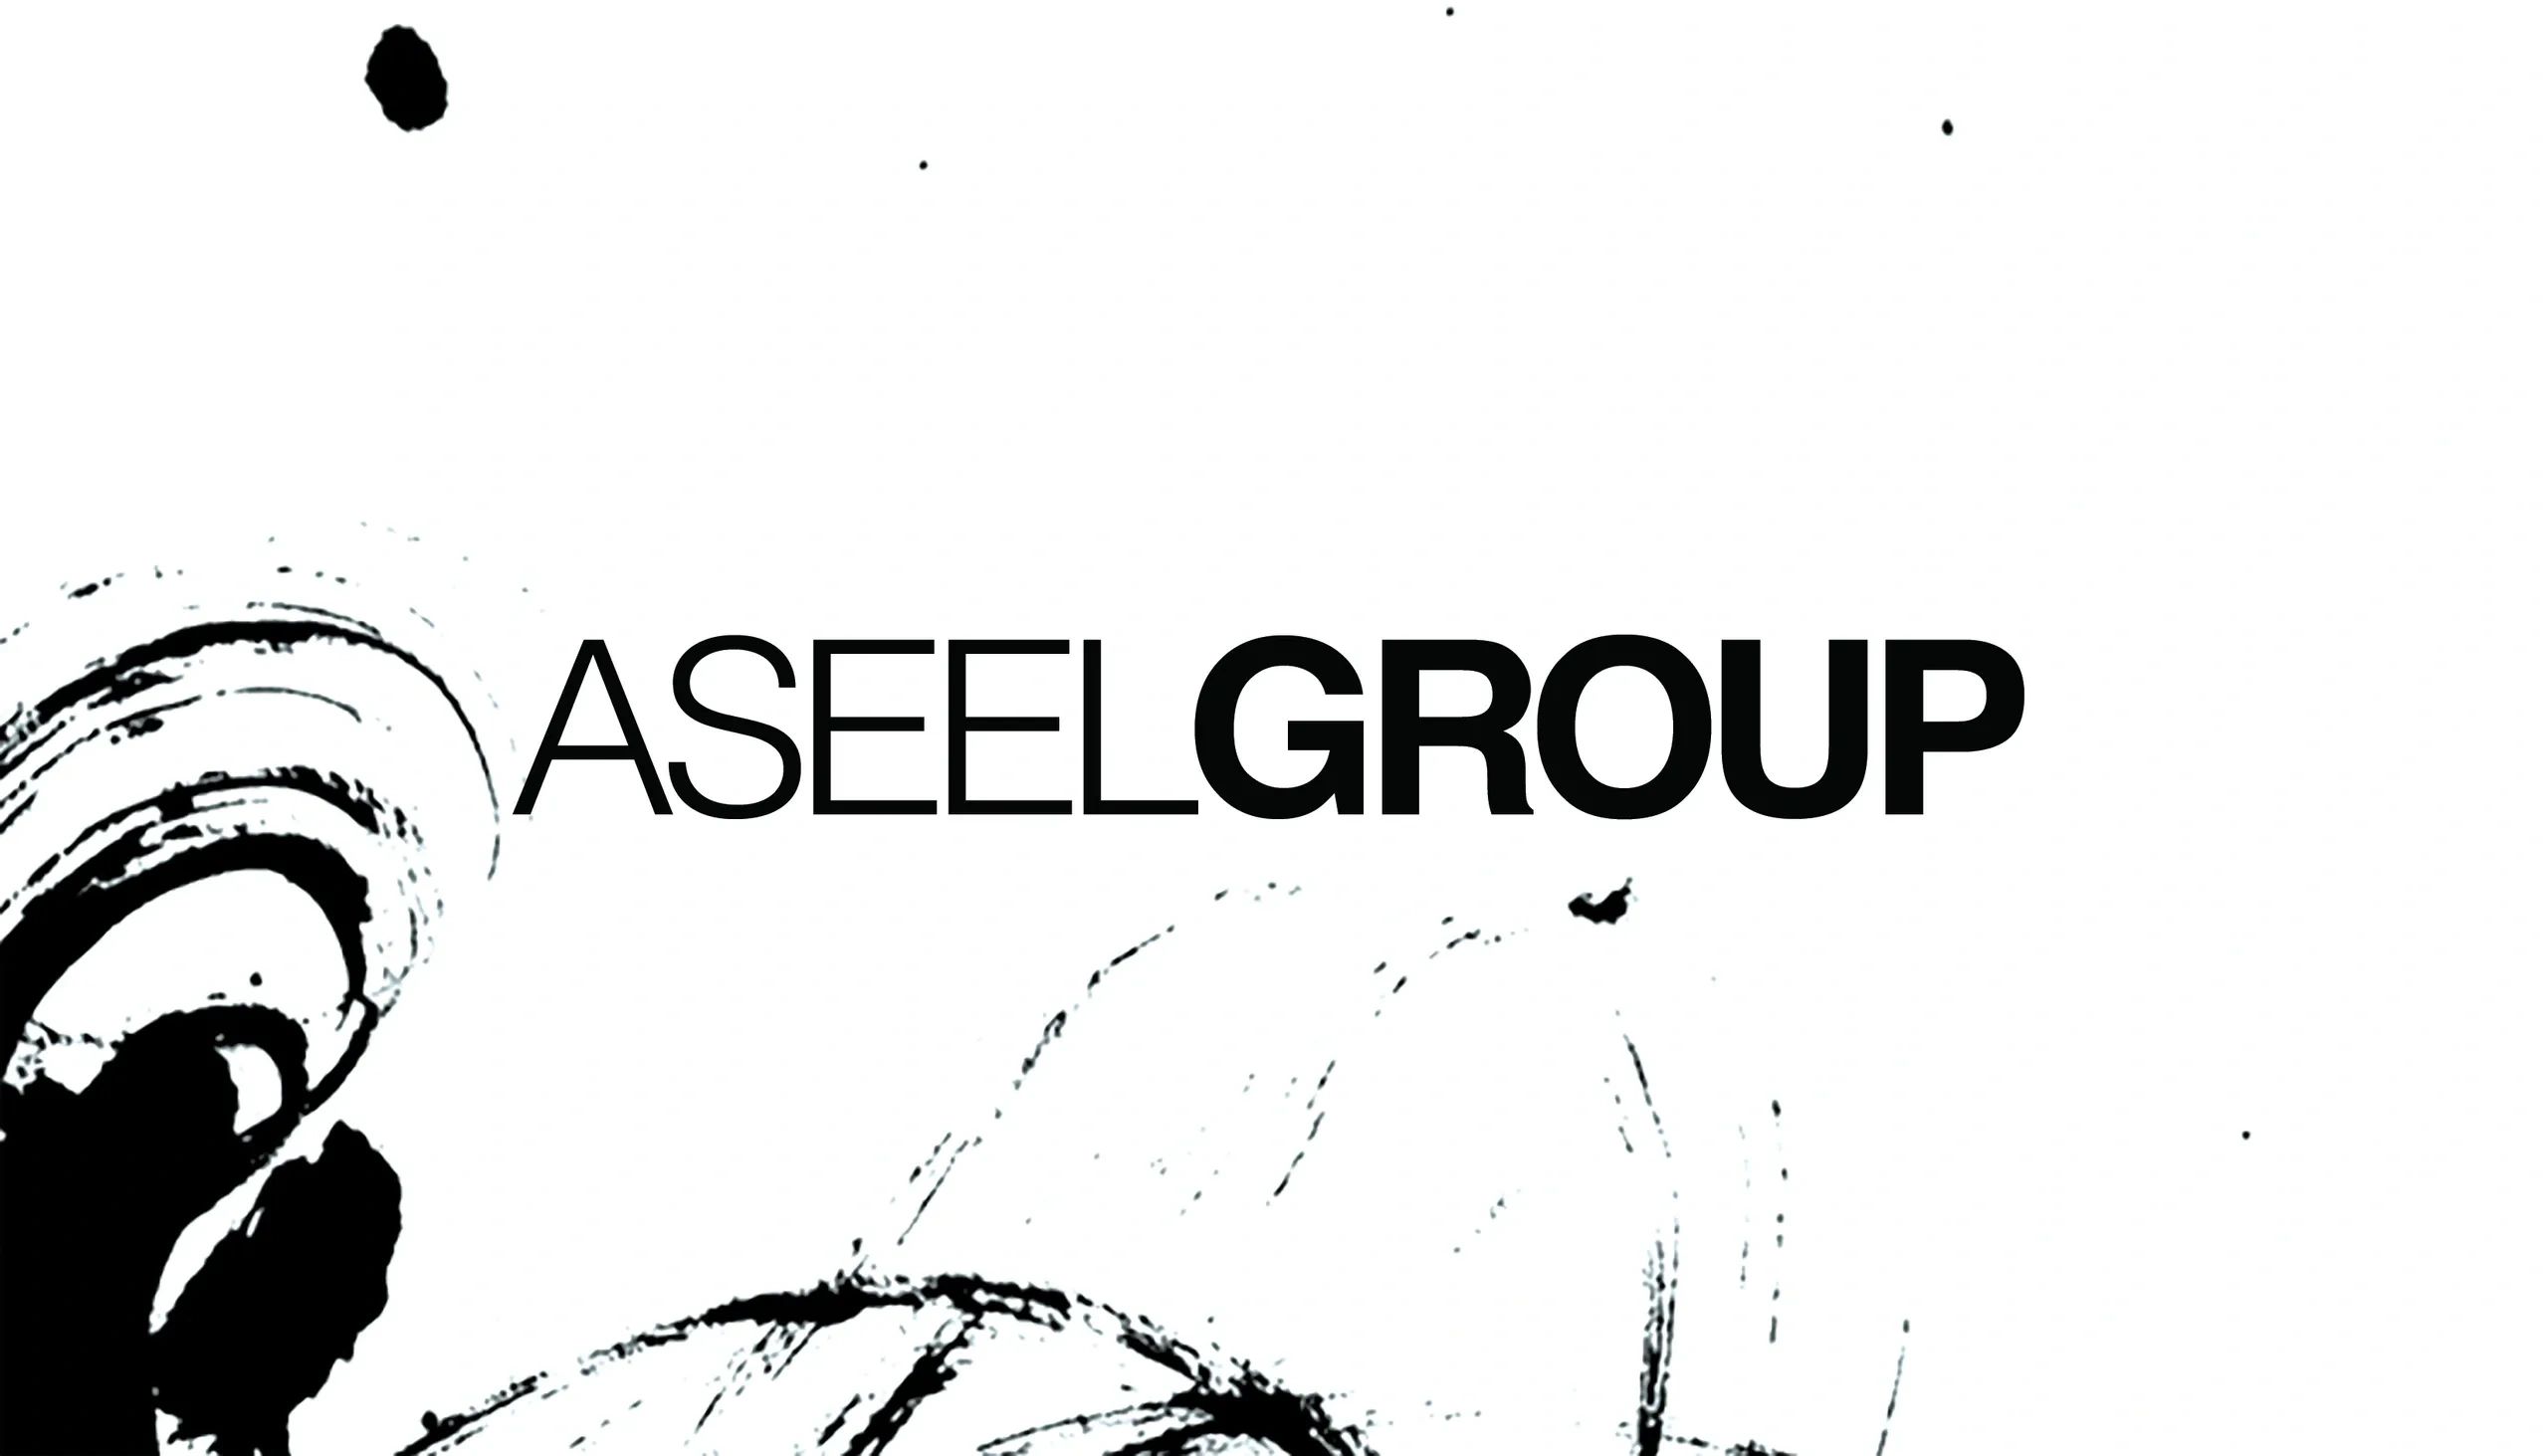 (c) Aseelgroup.com